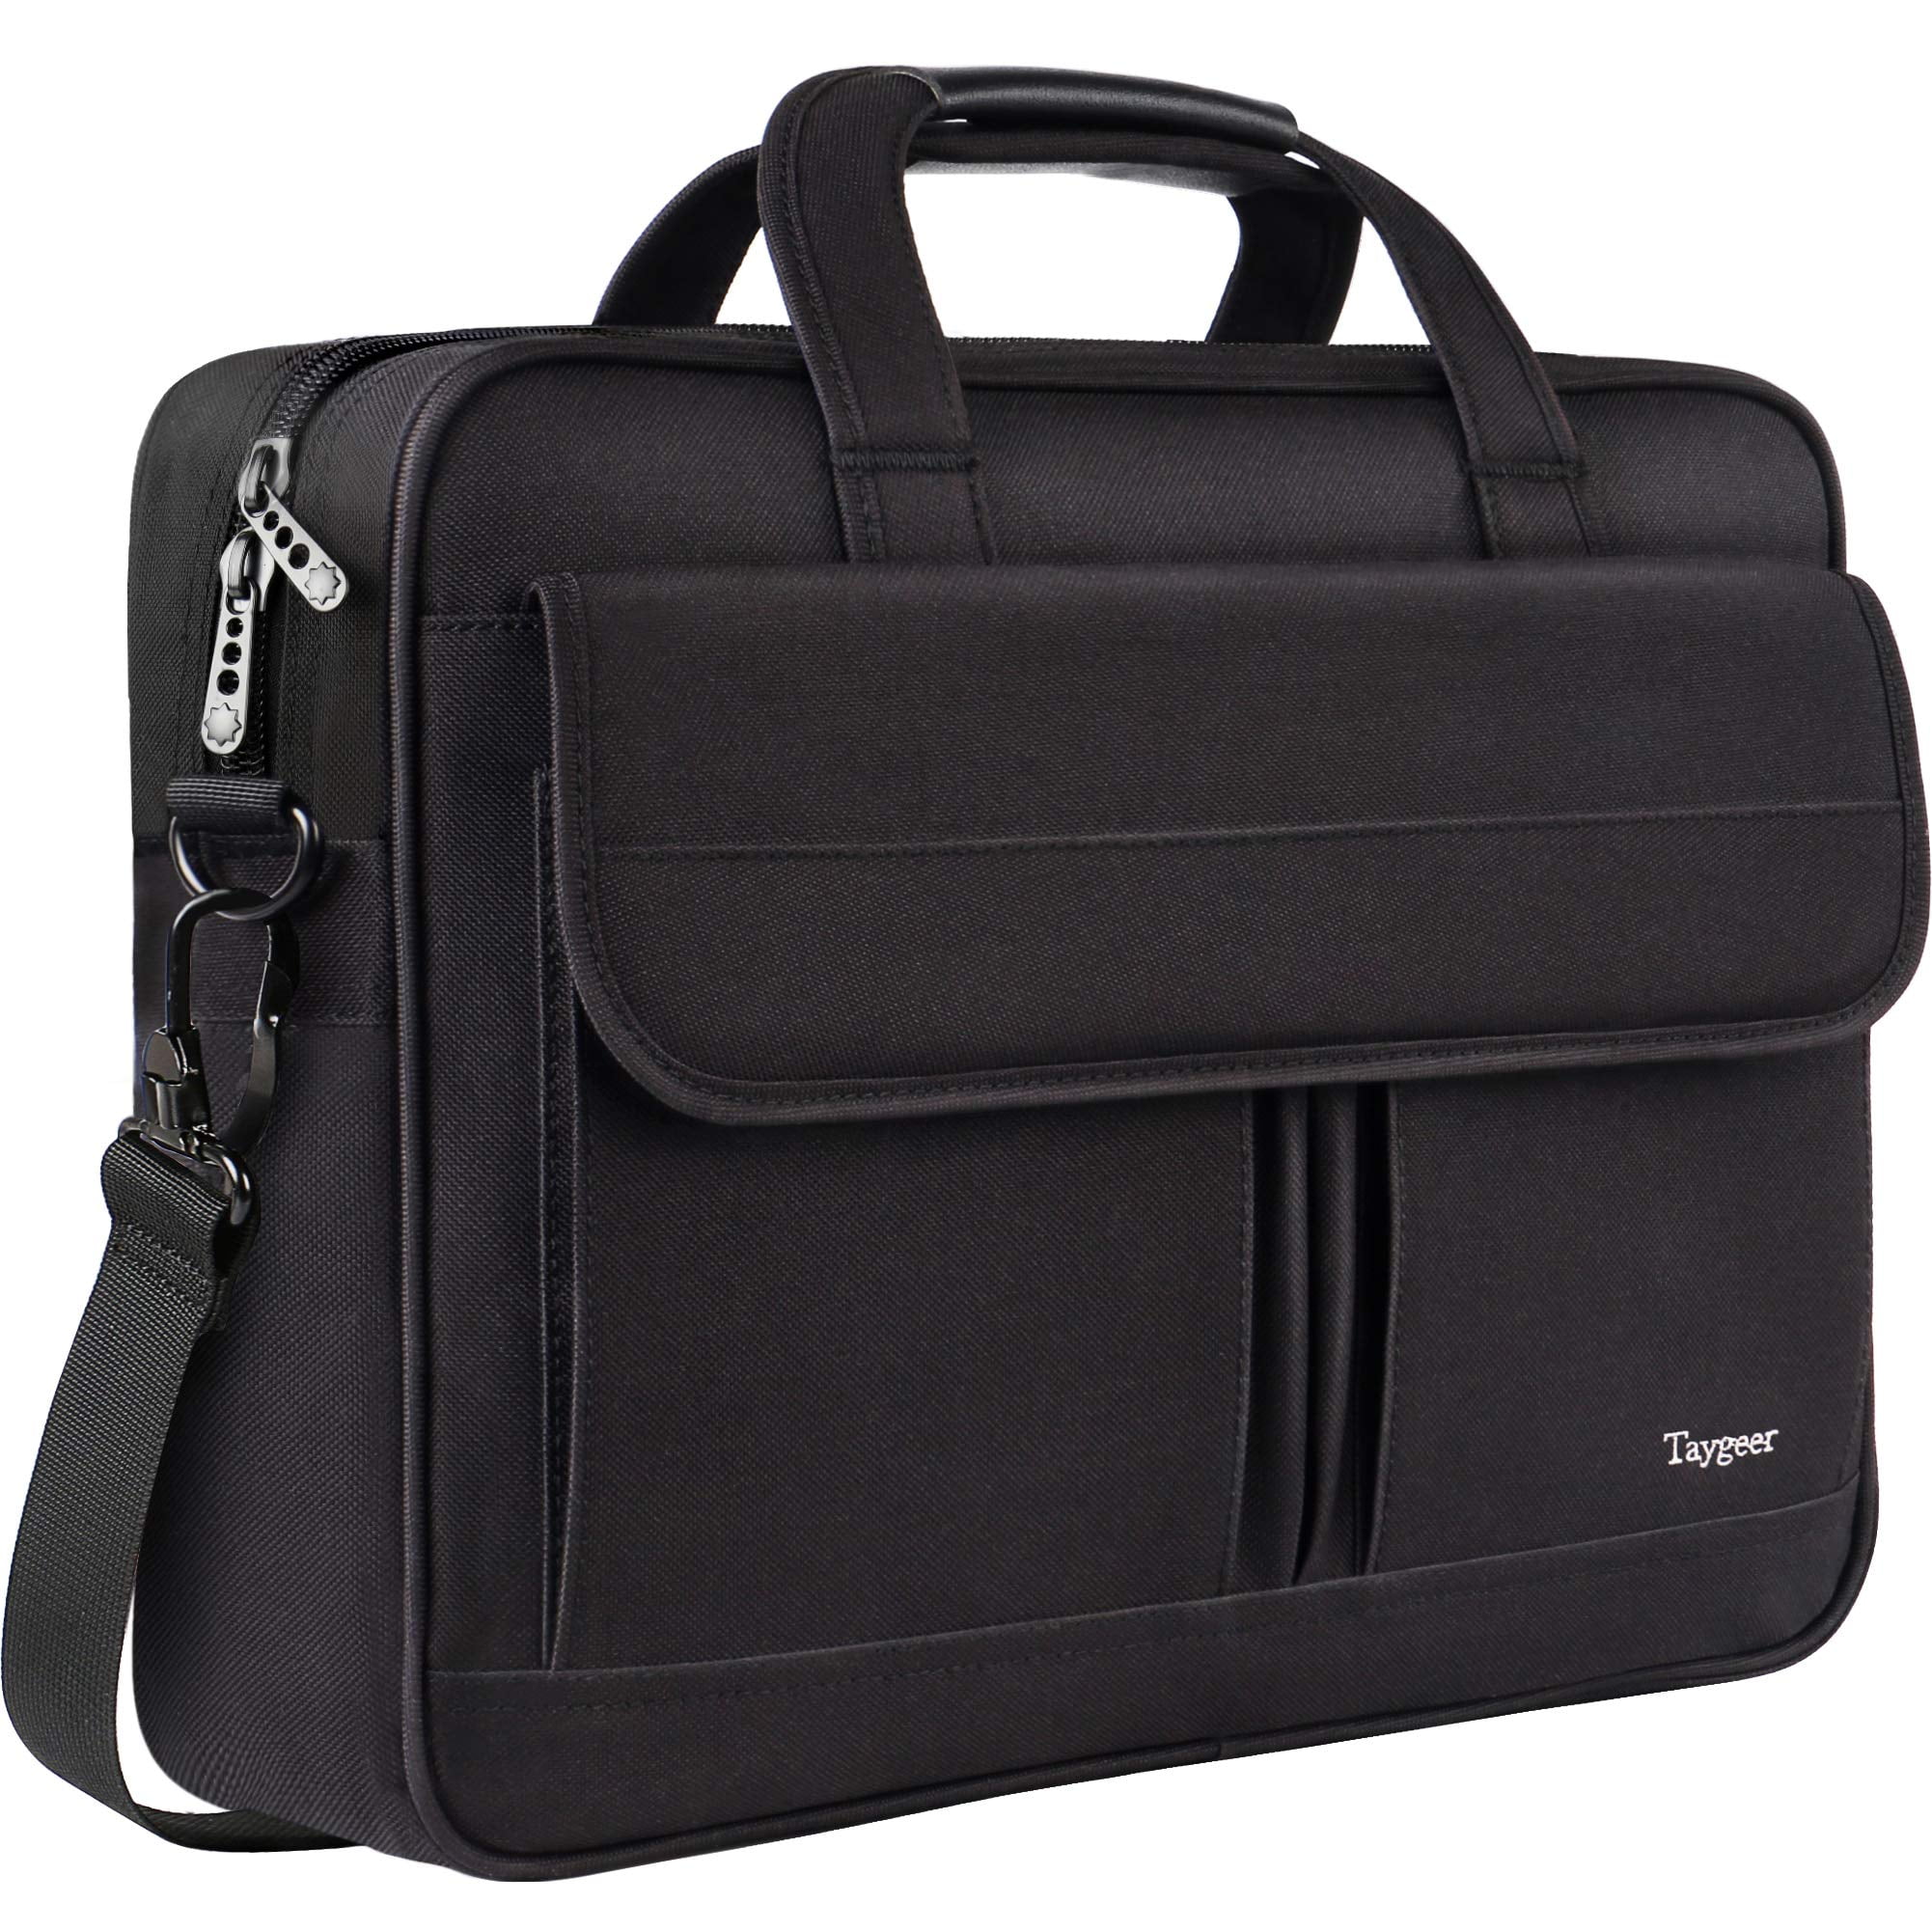 12 Inch Inch Laptop Bag Sleeve Case Tie Dye2 Notebook Waterproof Computer Tablet Carrying Bag Cover